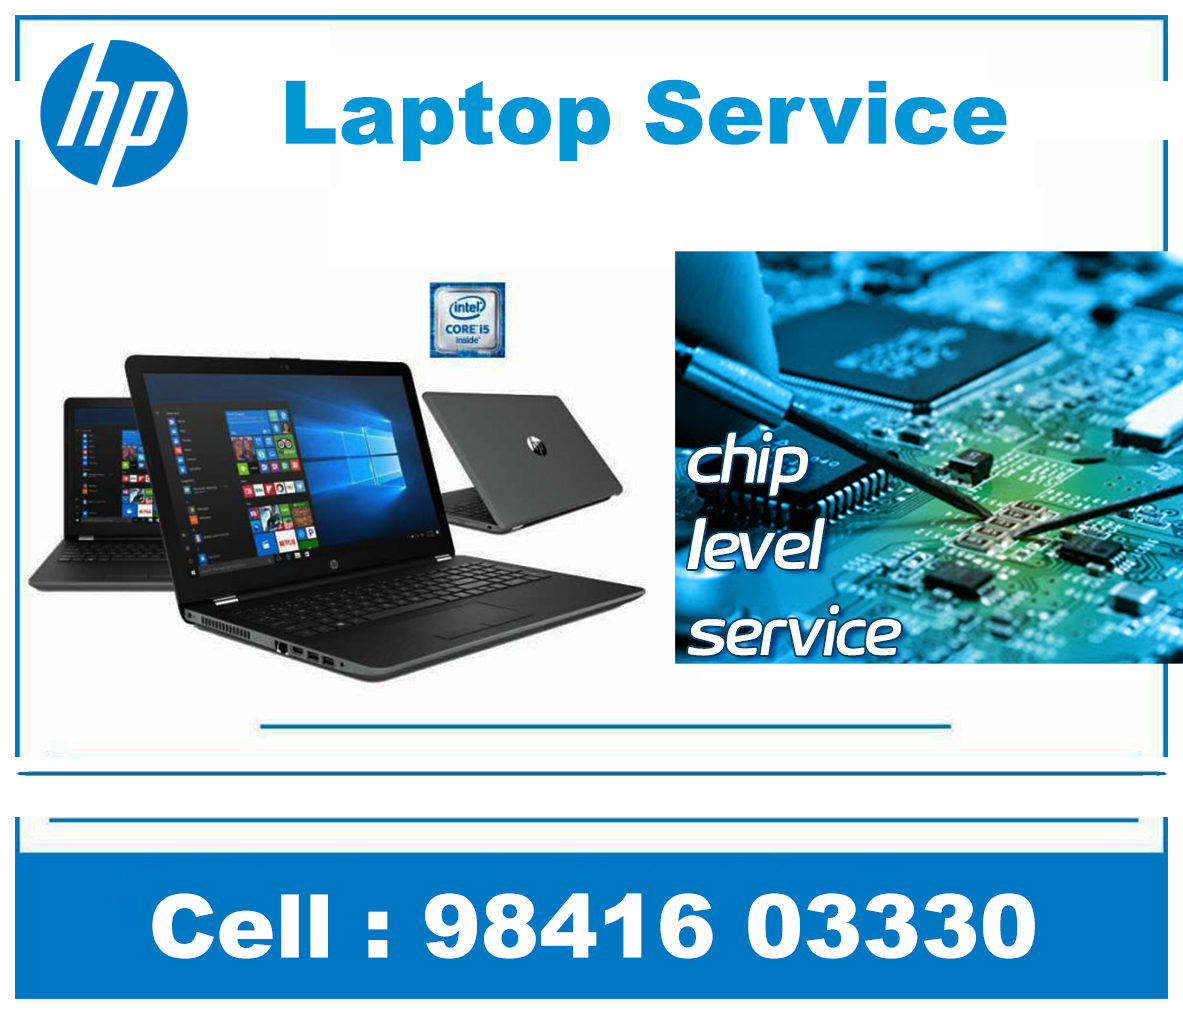 hp laptop service center in chennai